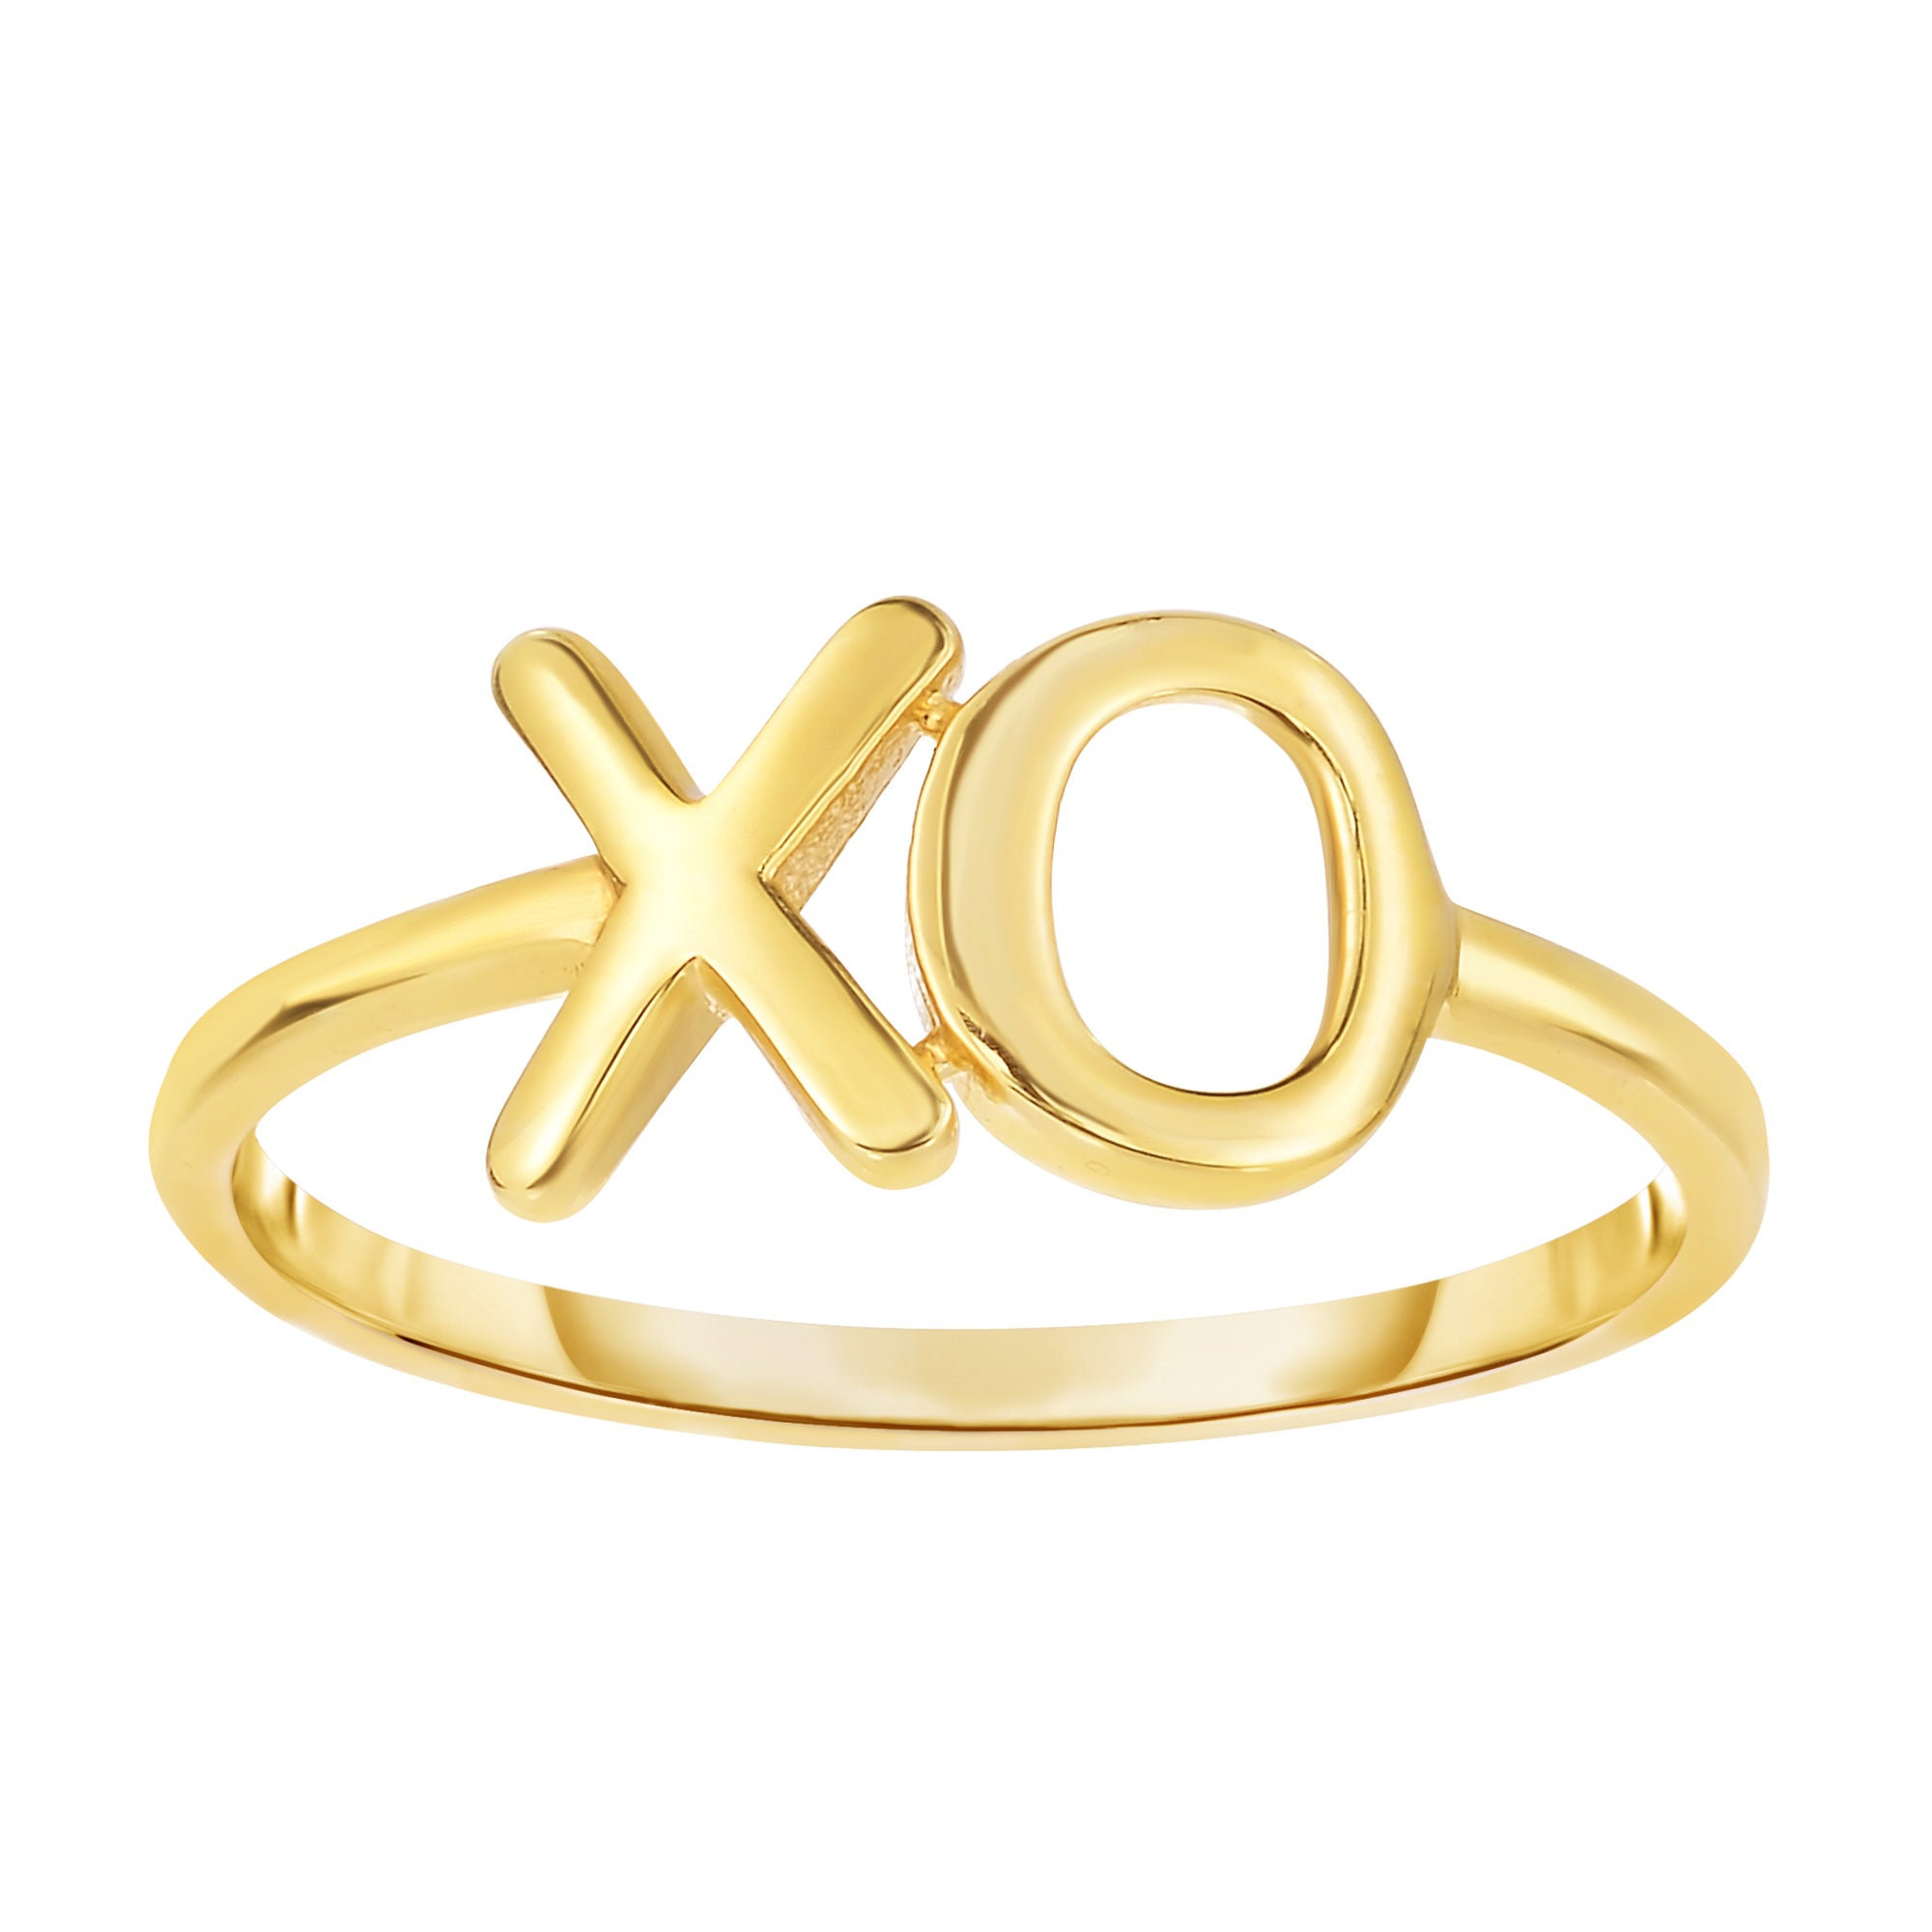 14K Yellow Gold Hug And Kiss Ring, Size 7